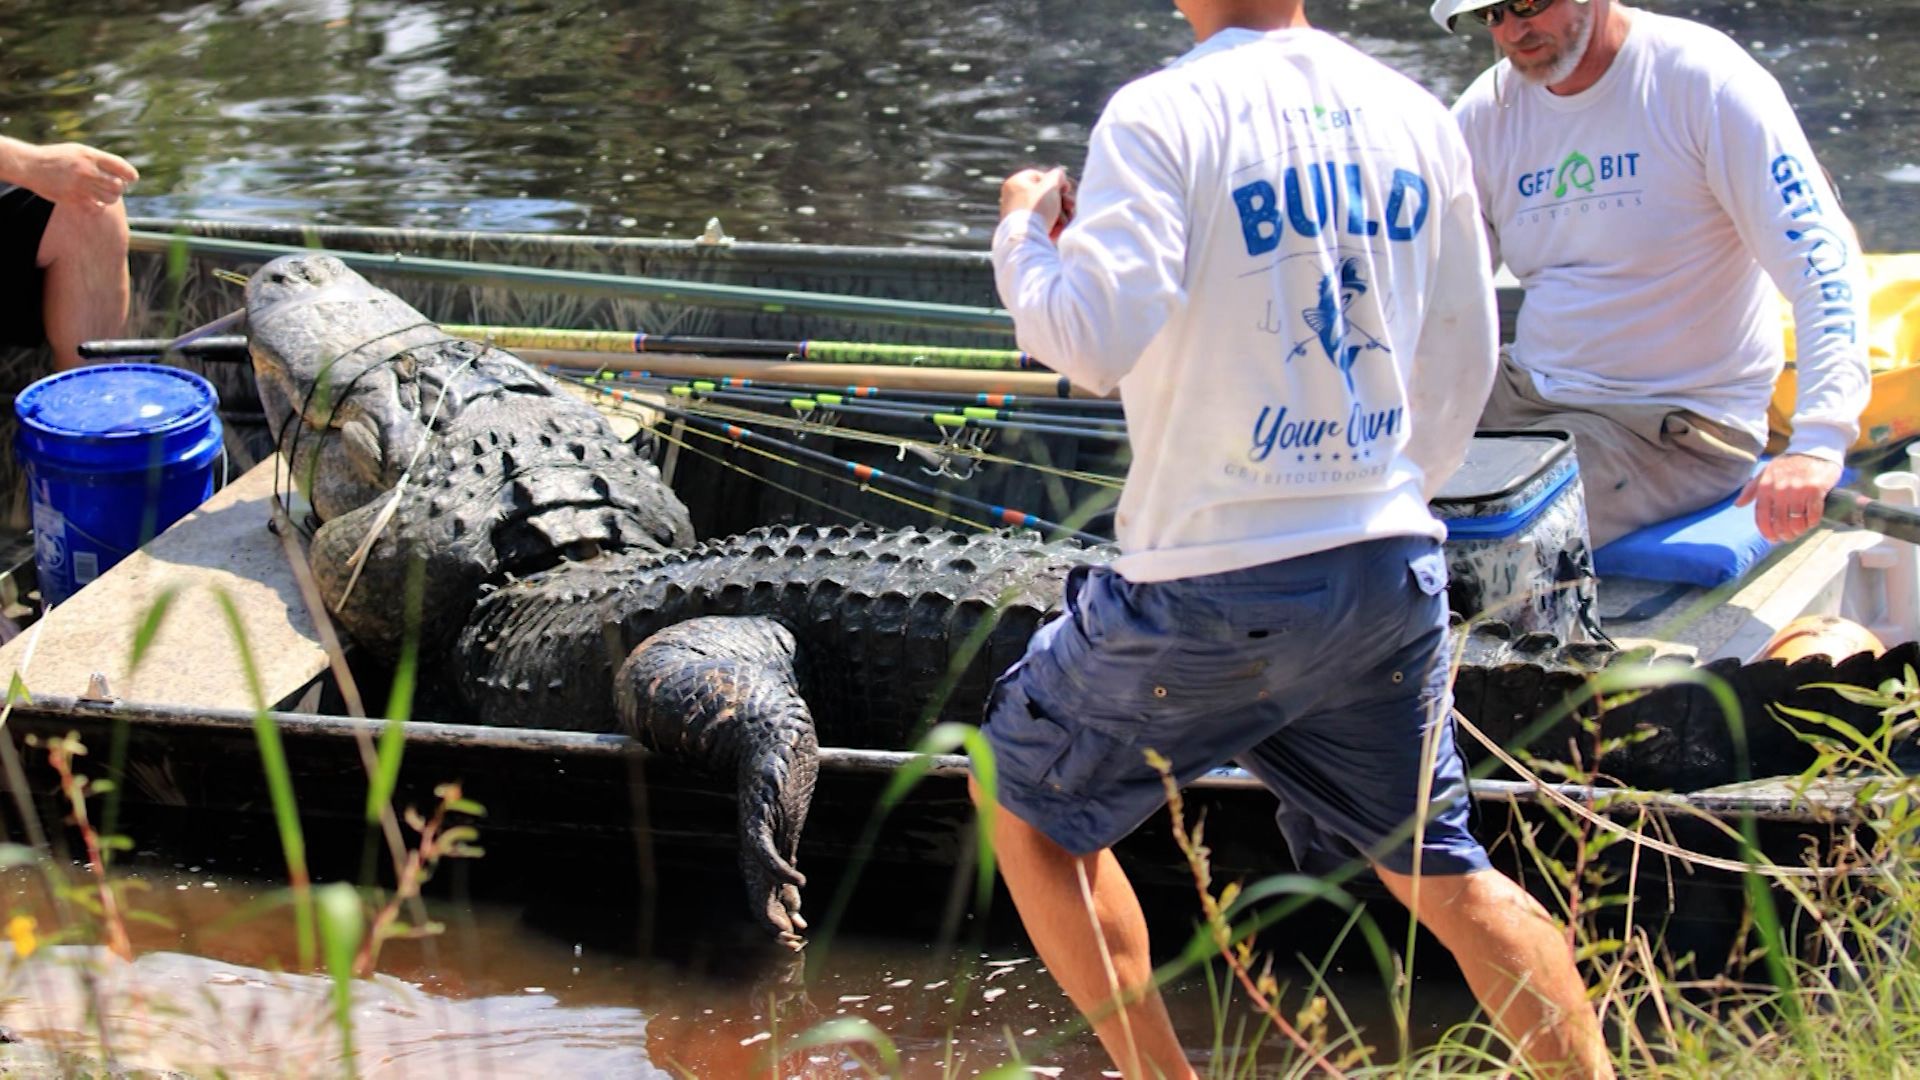 Catch of a lifetime': Watch hunters catch 900-pound alligator